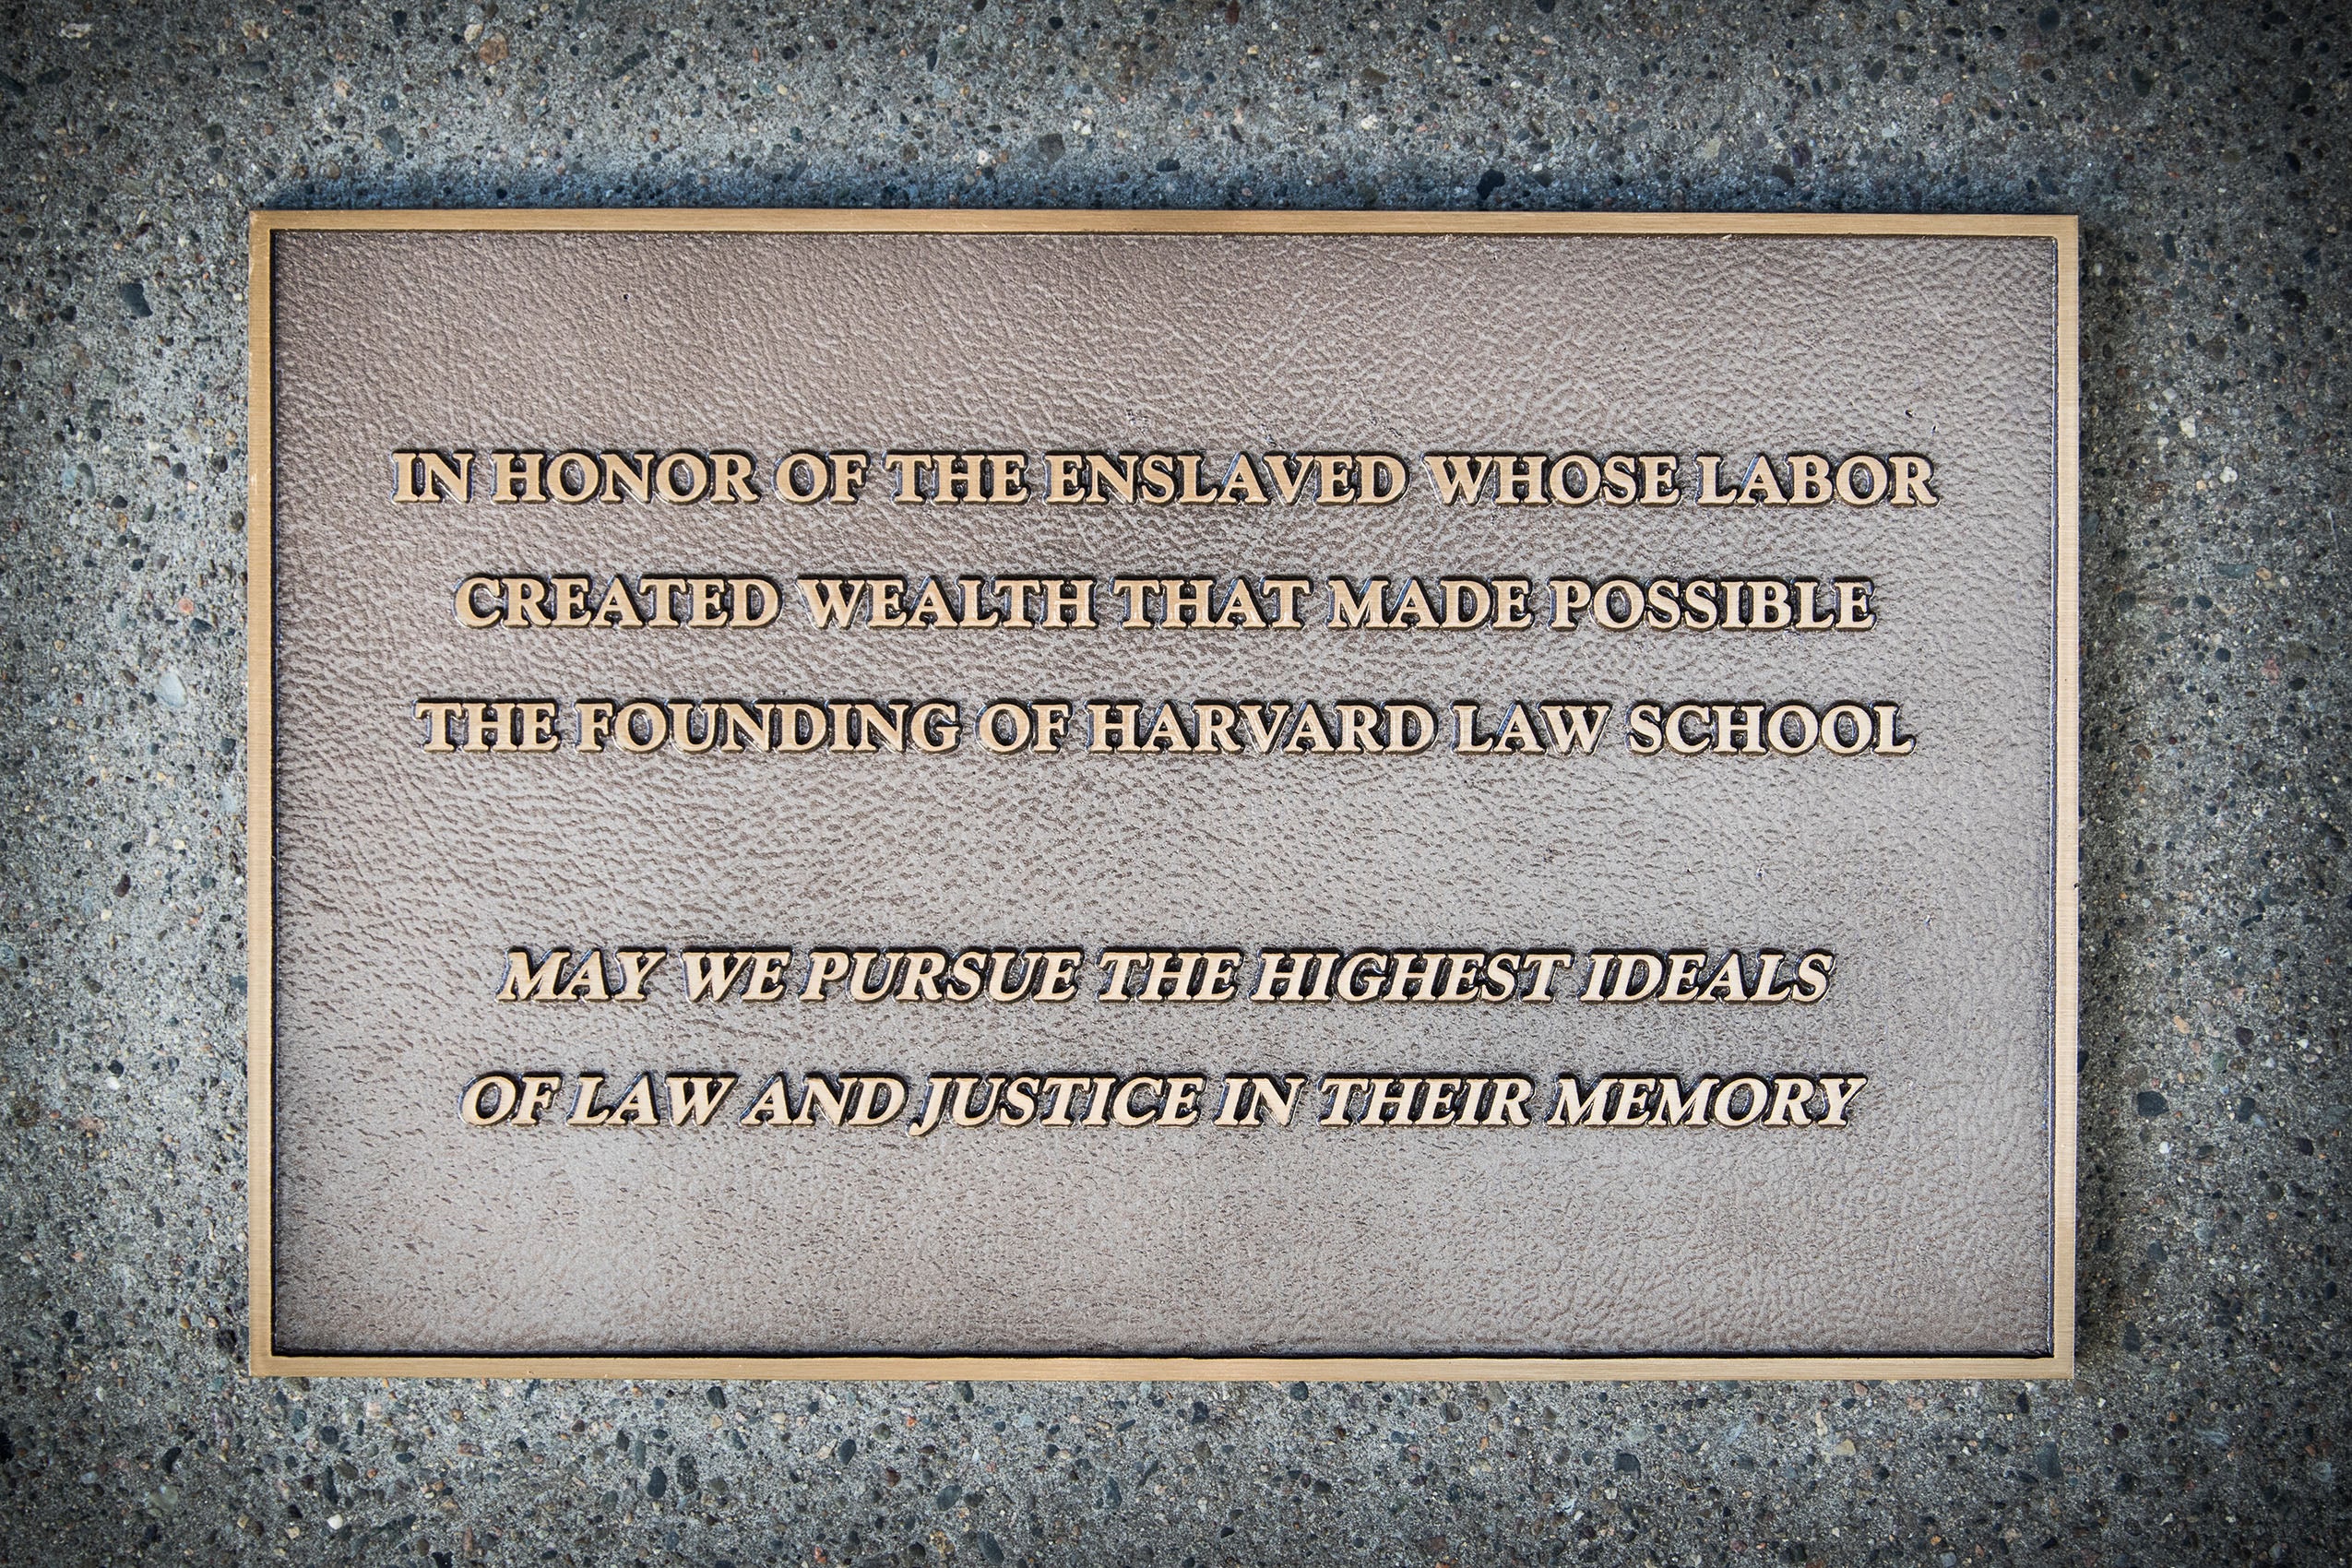 Harvard Law School unveils memorial honoring enslaved people who enabled its founding